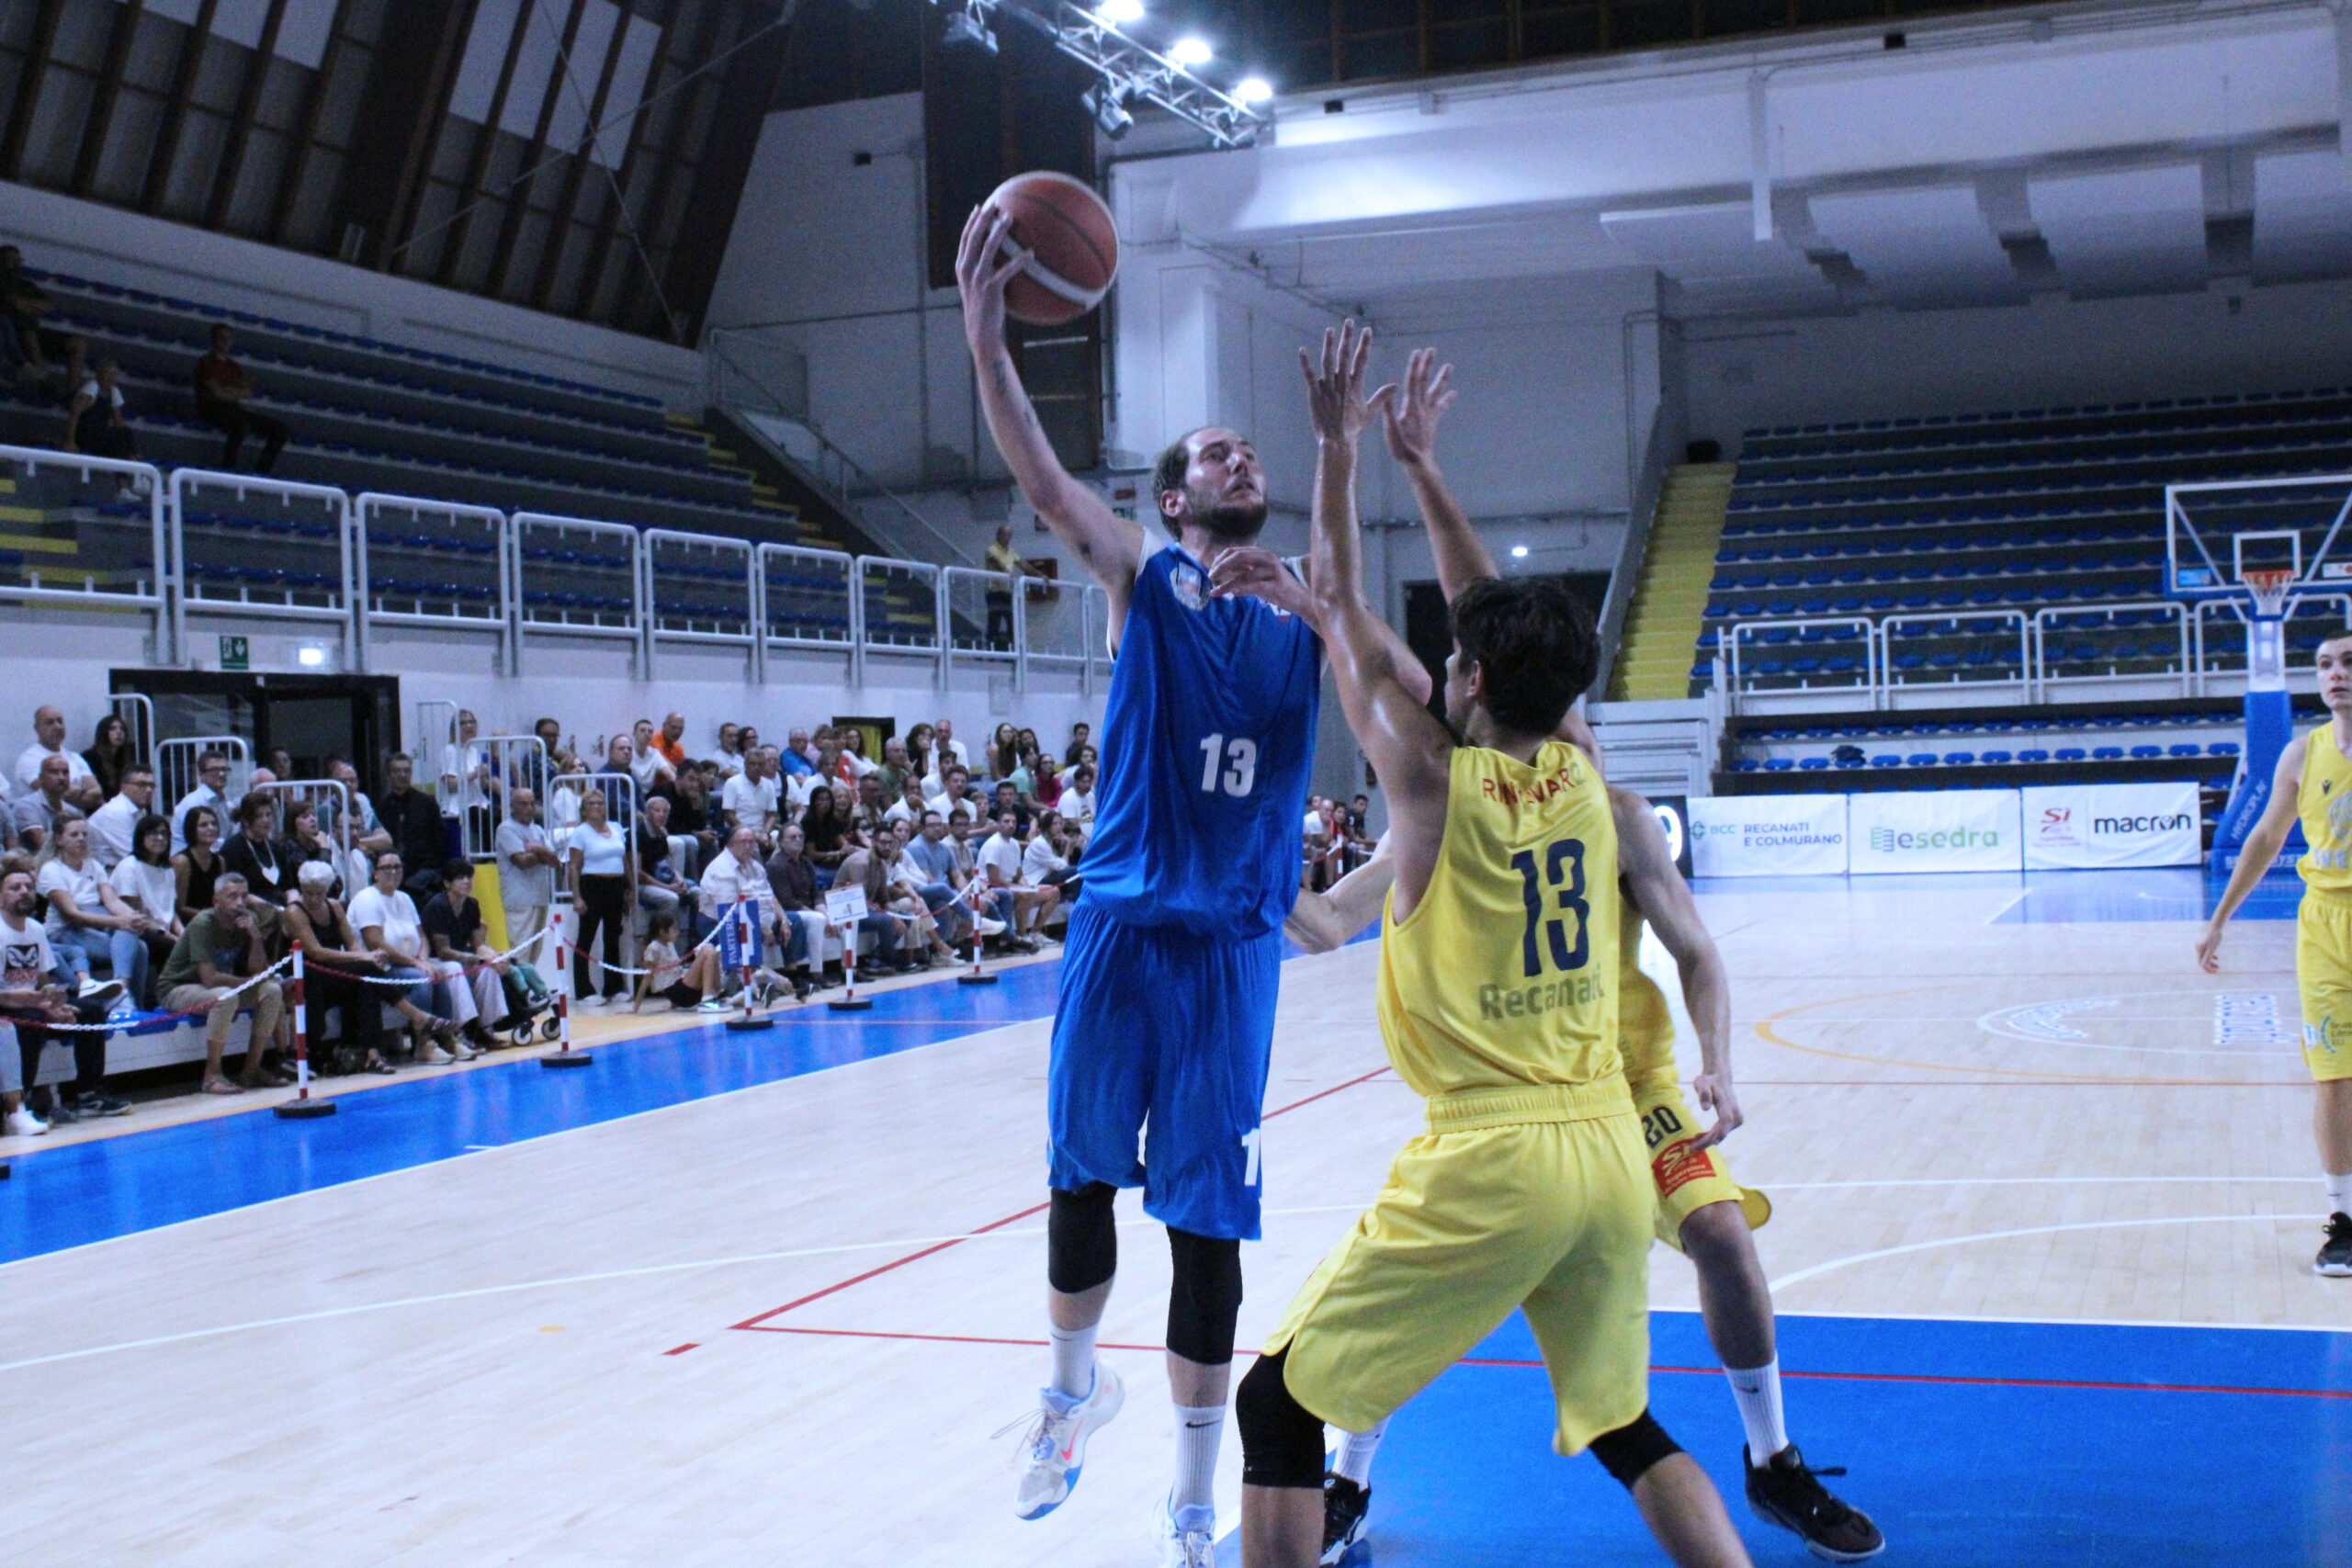 Pallacanestro Recanati - PSE Basket 74-61: si parte con una sconfitta!